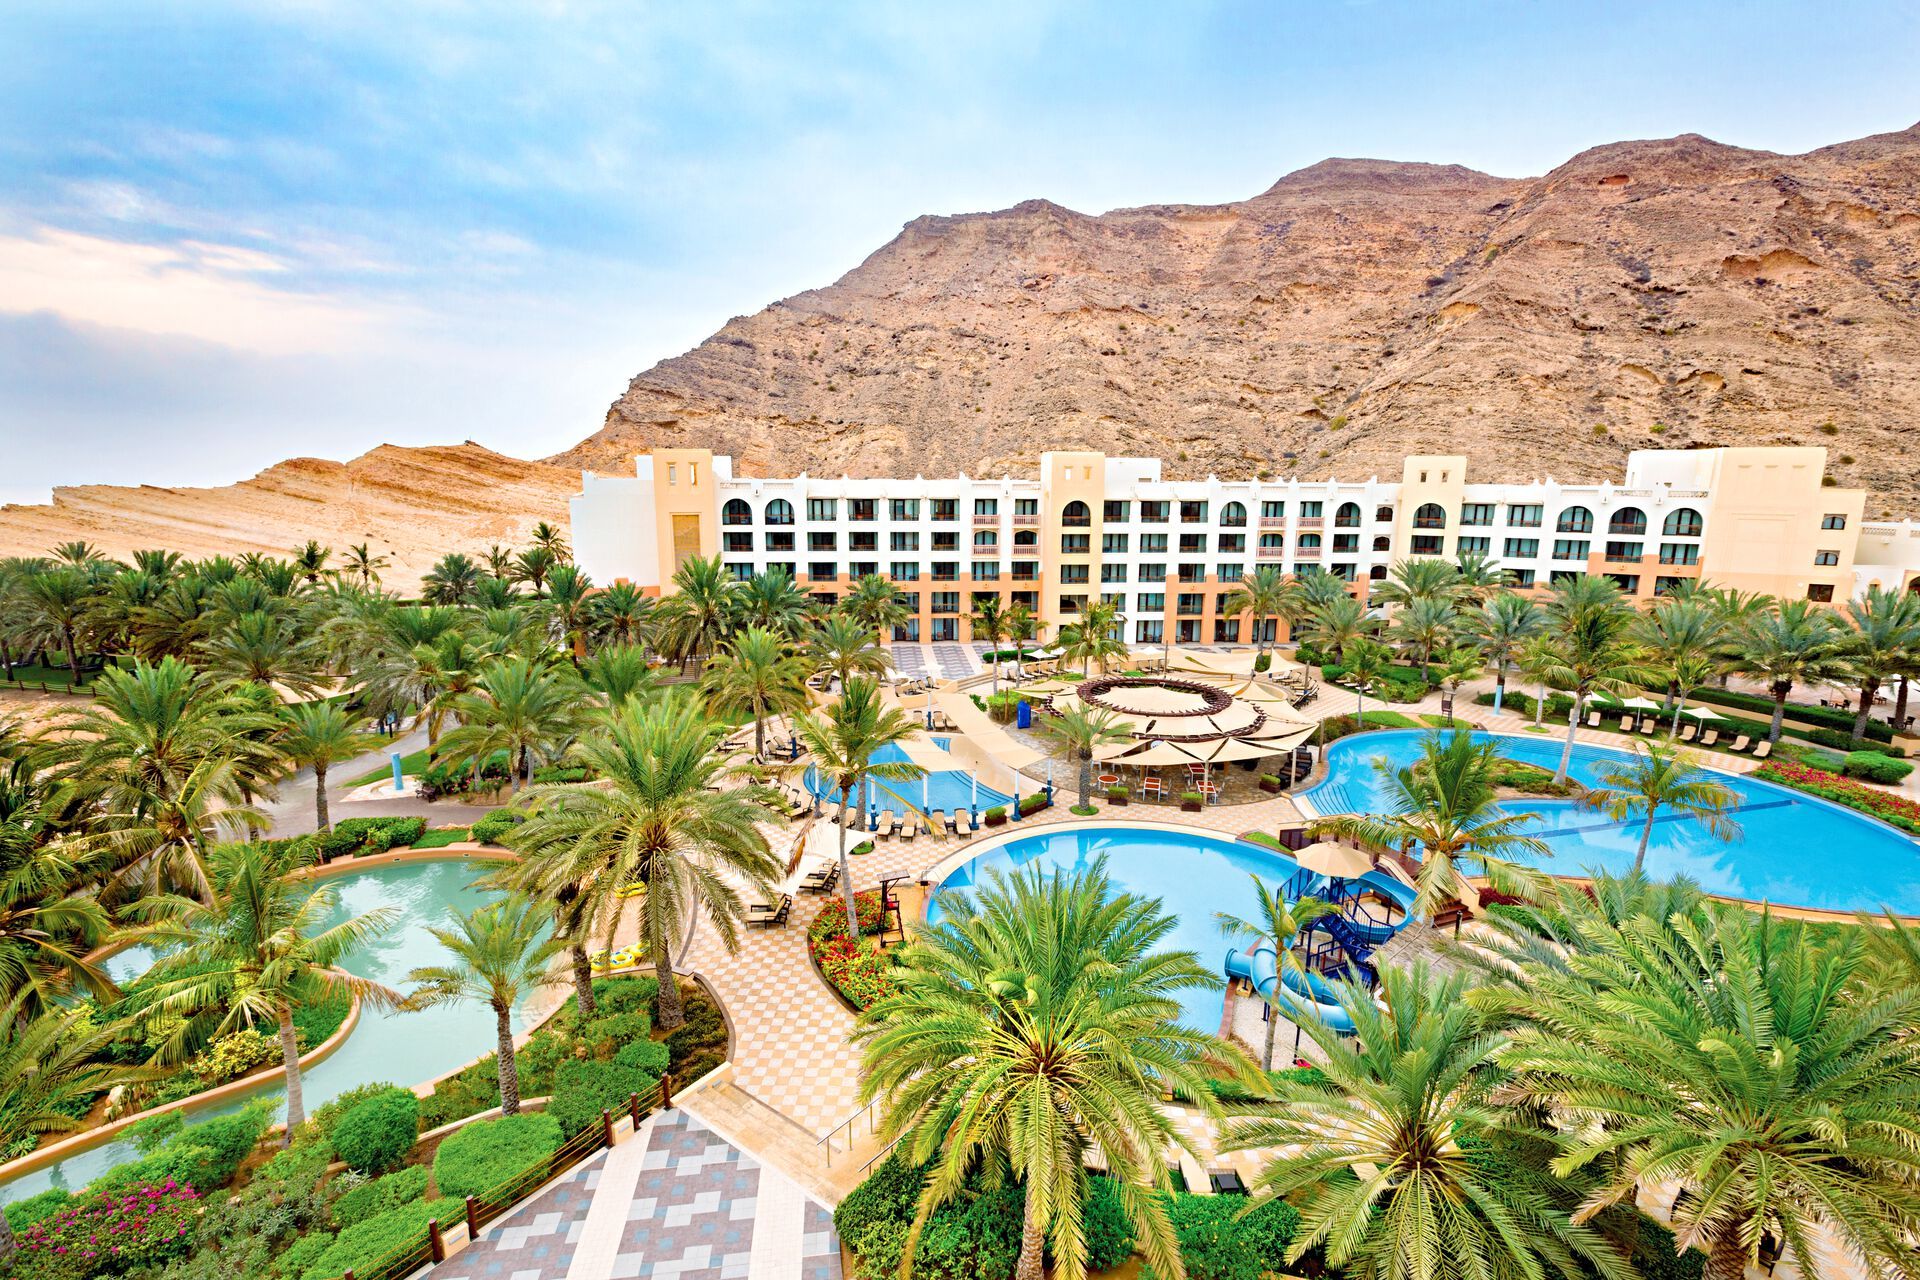 Shangri-La Barr Al Jissah Resort & Spa - Al Waha - 5*